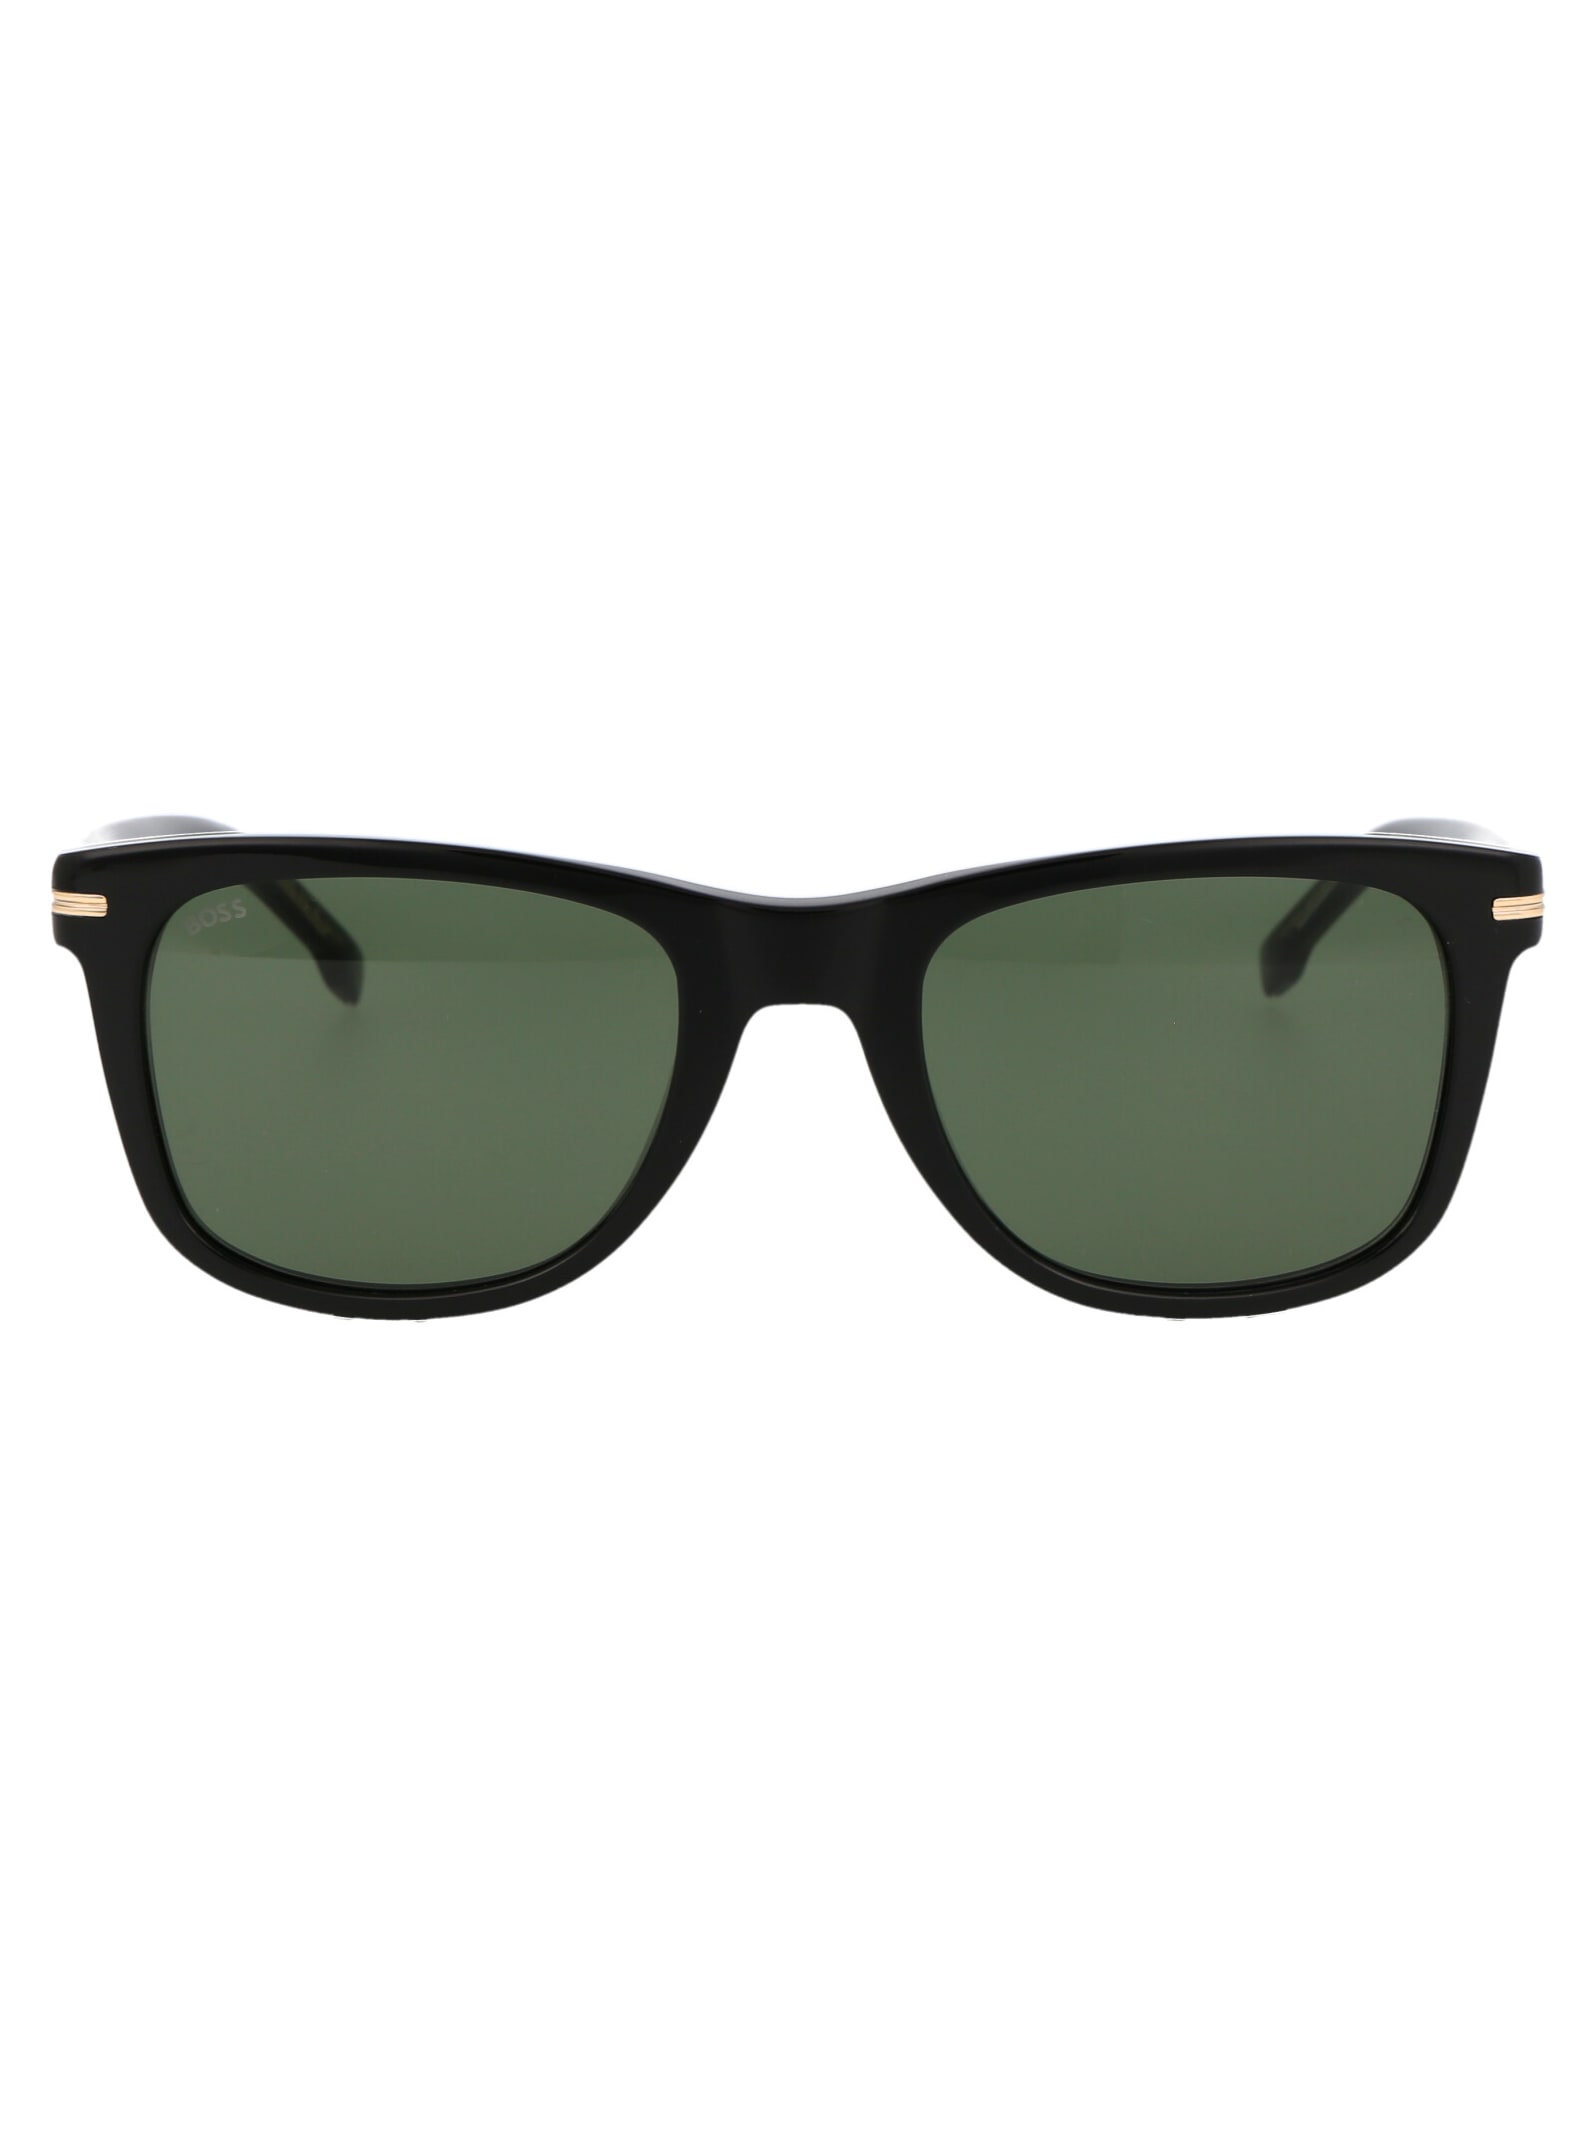 Boss 1508/s Sunglasses